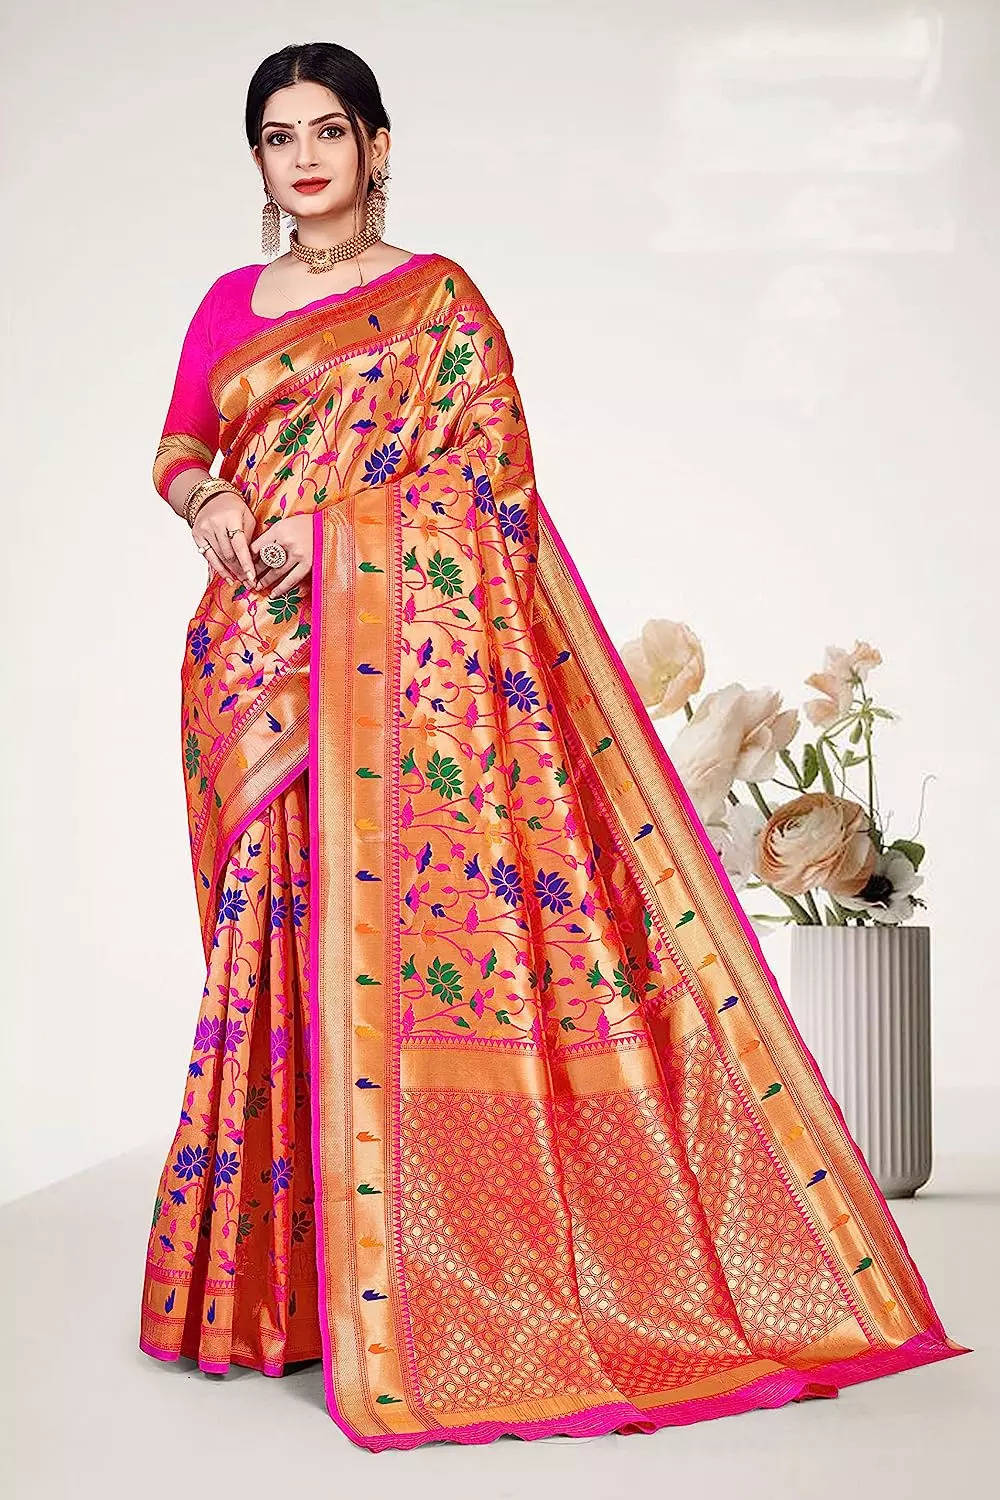 Jaanvi Fashion Saaree - Get Best Price from Manufacturers